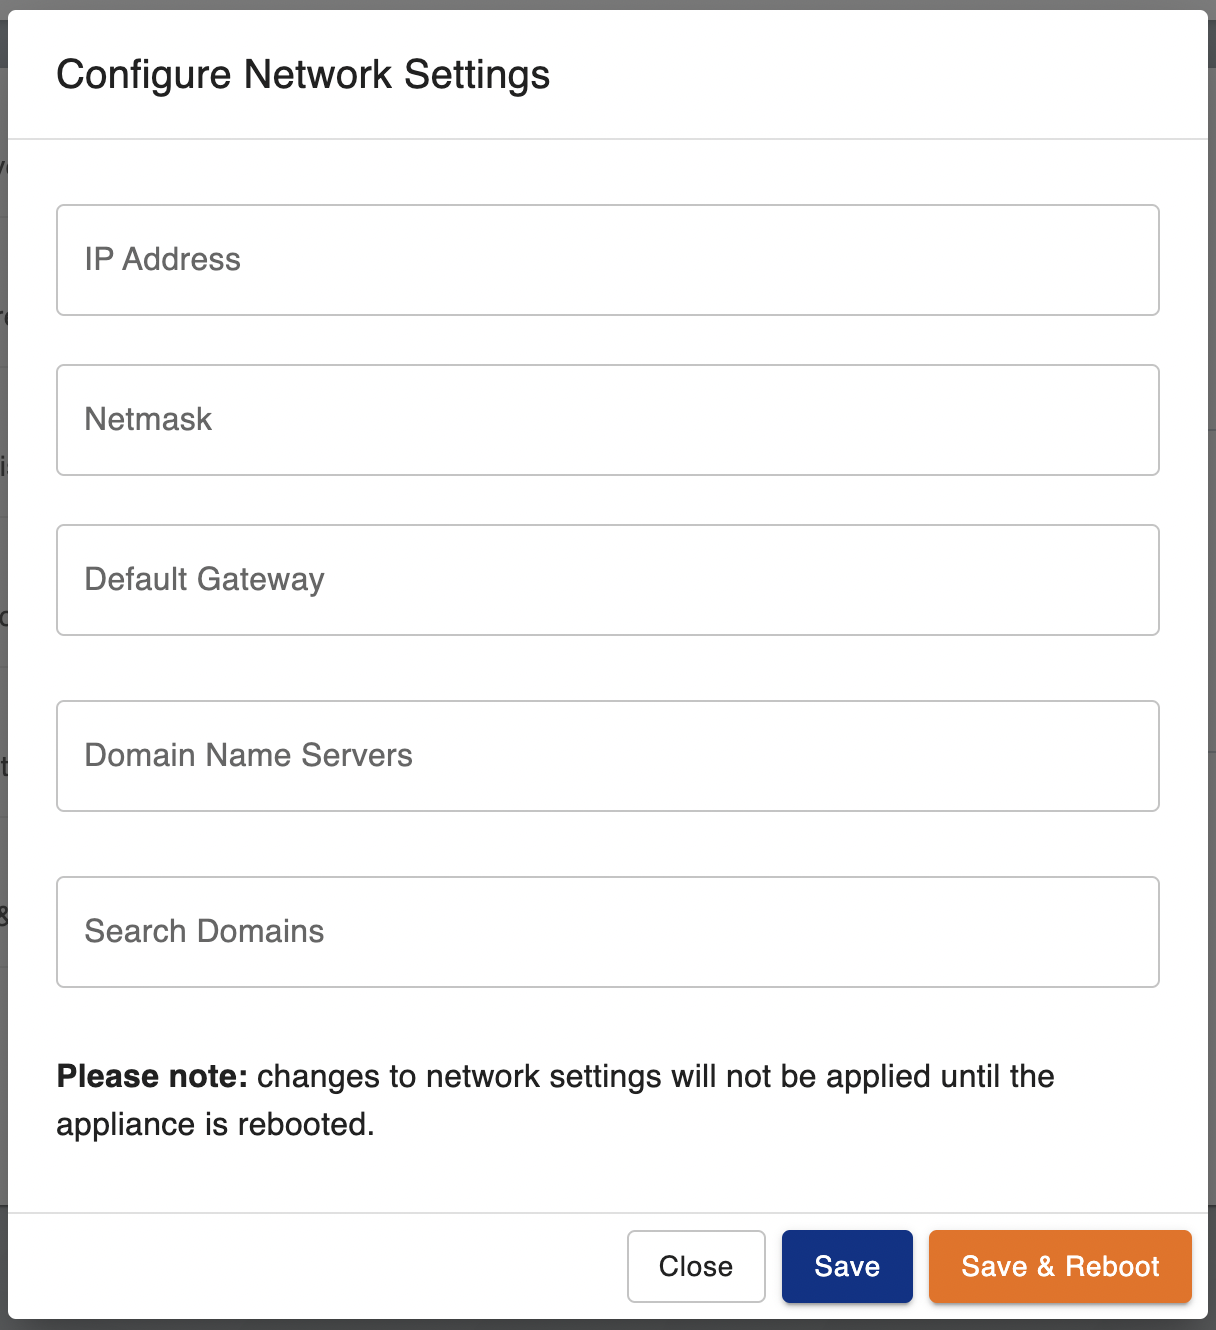 Network Settings Form